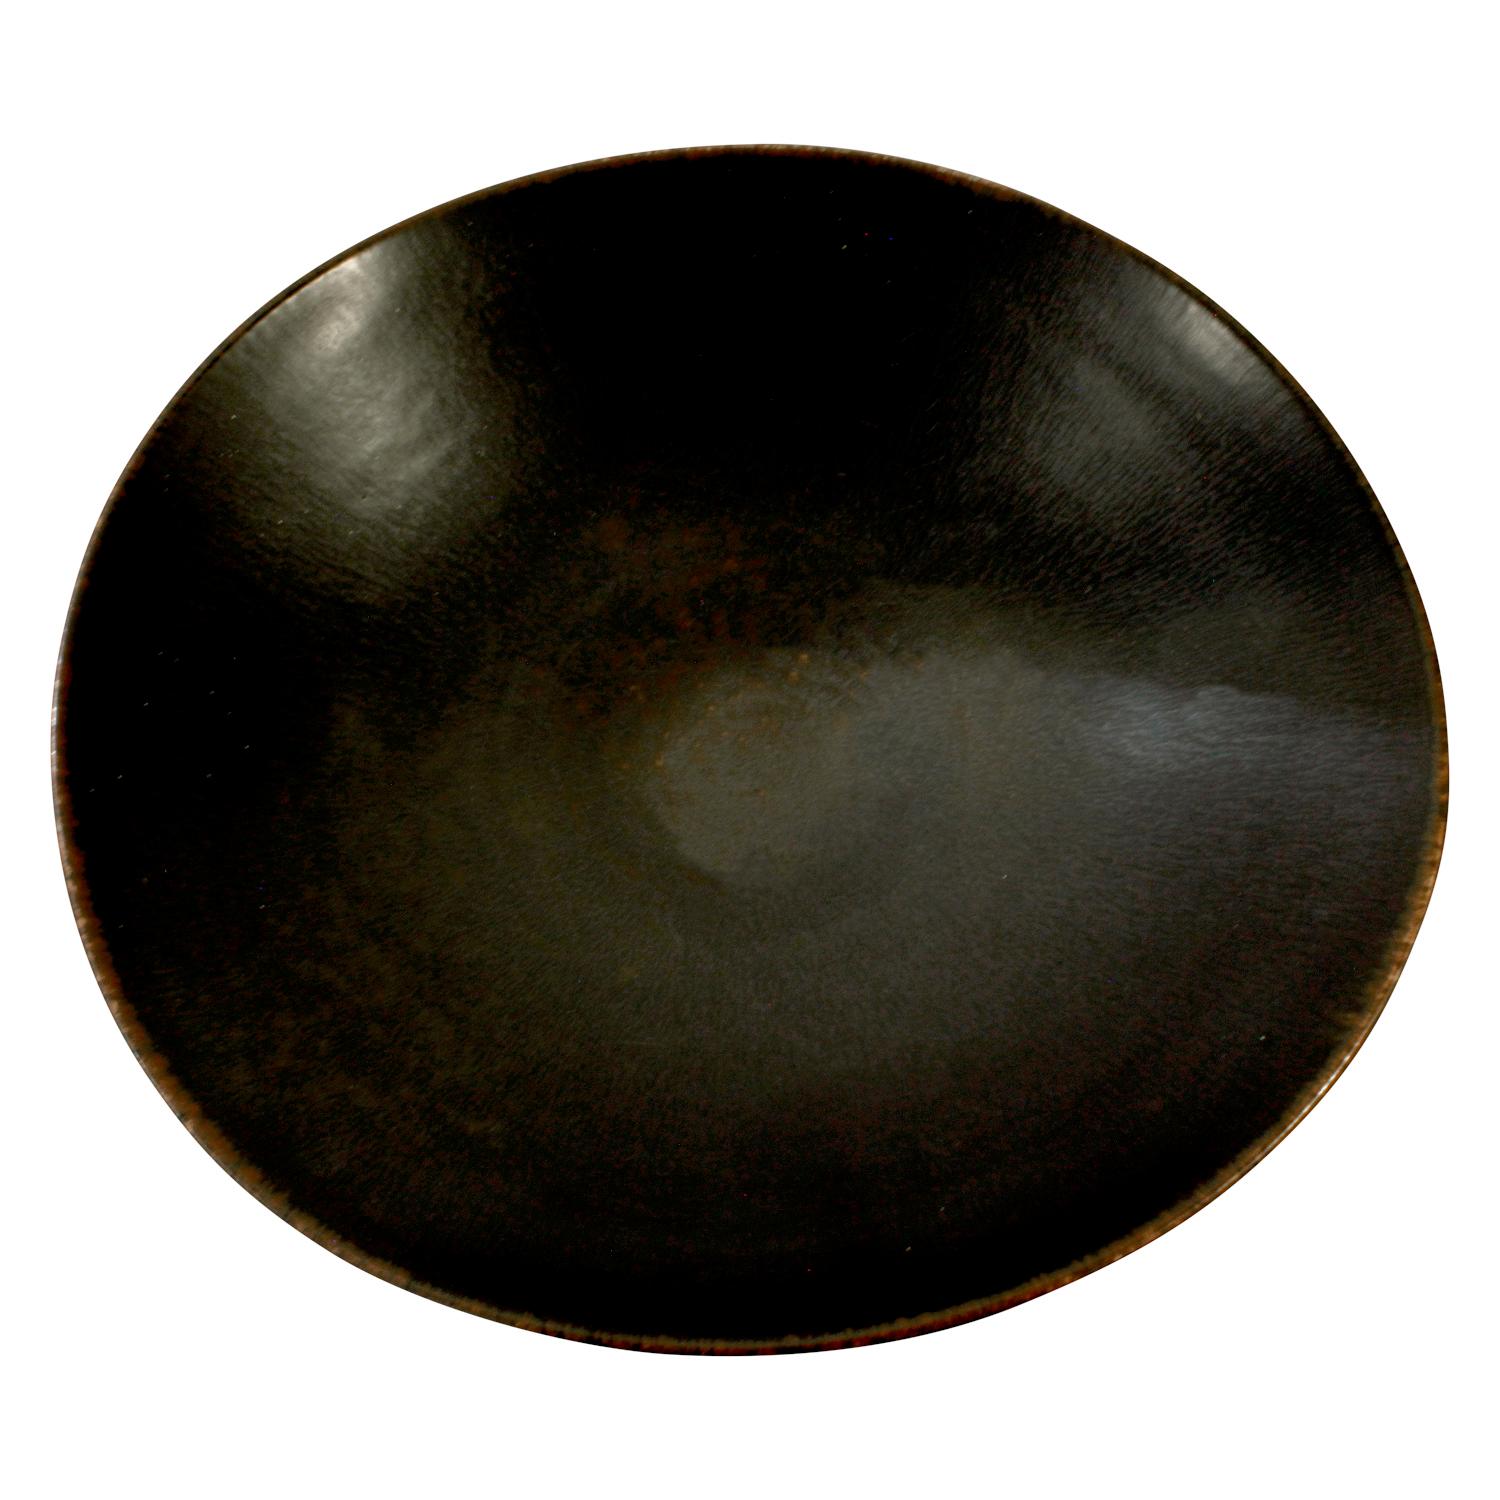 Brown “haresfur” glazed ceramic footed bowl by Carl Harry Stålhane for Rörstrand, Sweden, 1960s (signed on bottom 